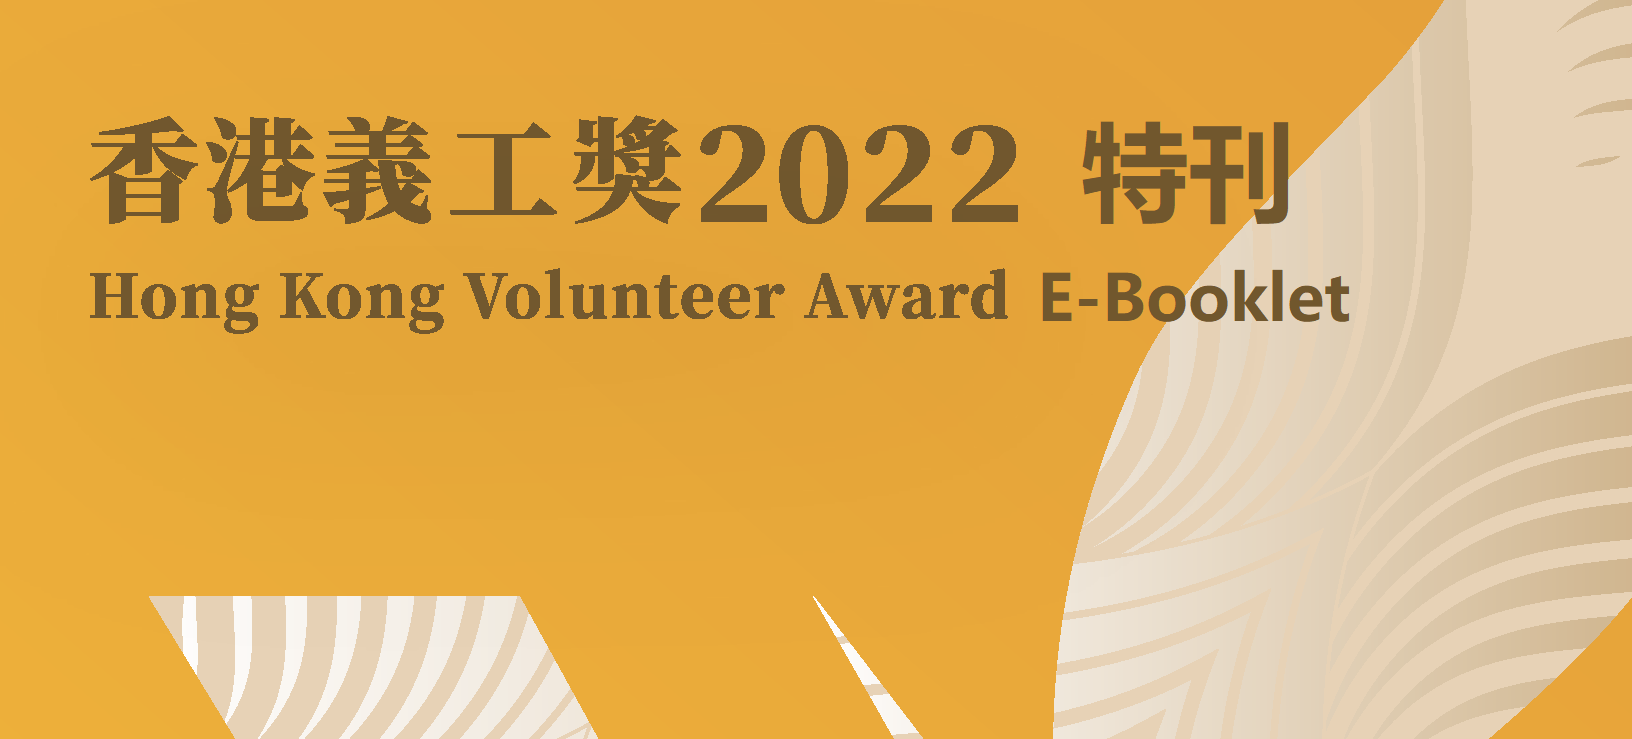 Hong Kong Volunteer Award 2022 E-Booklet